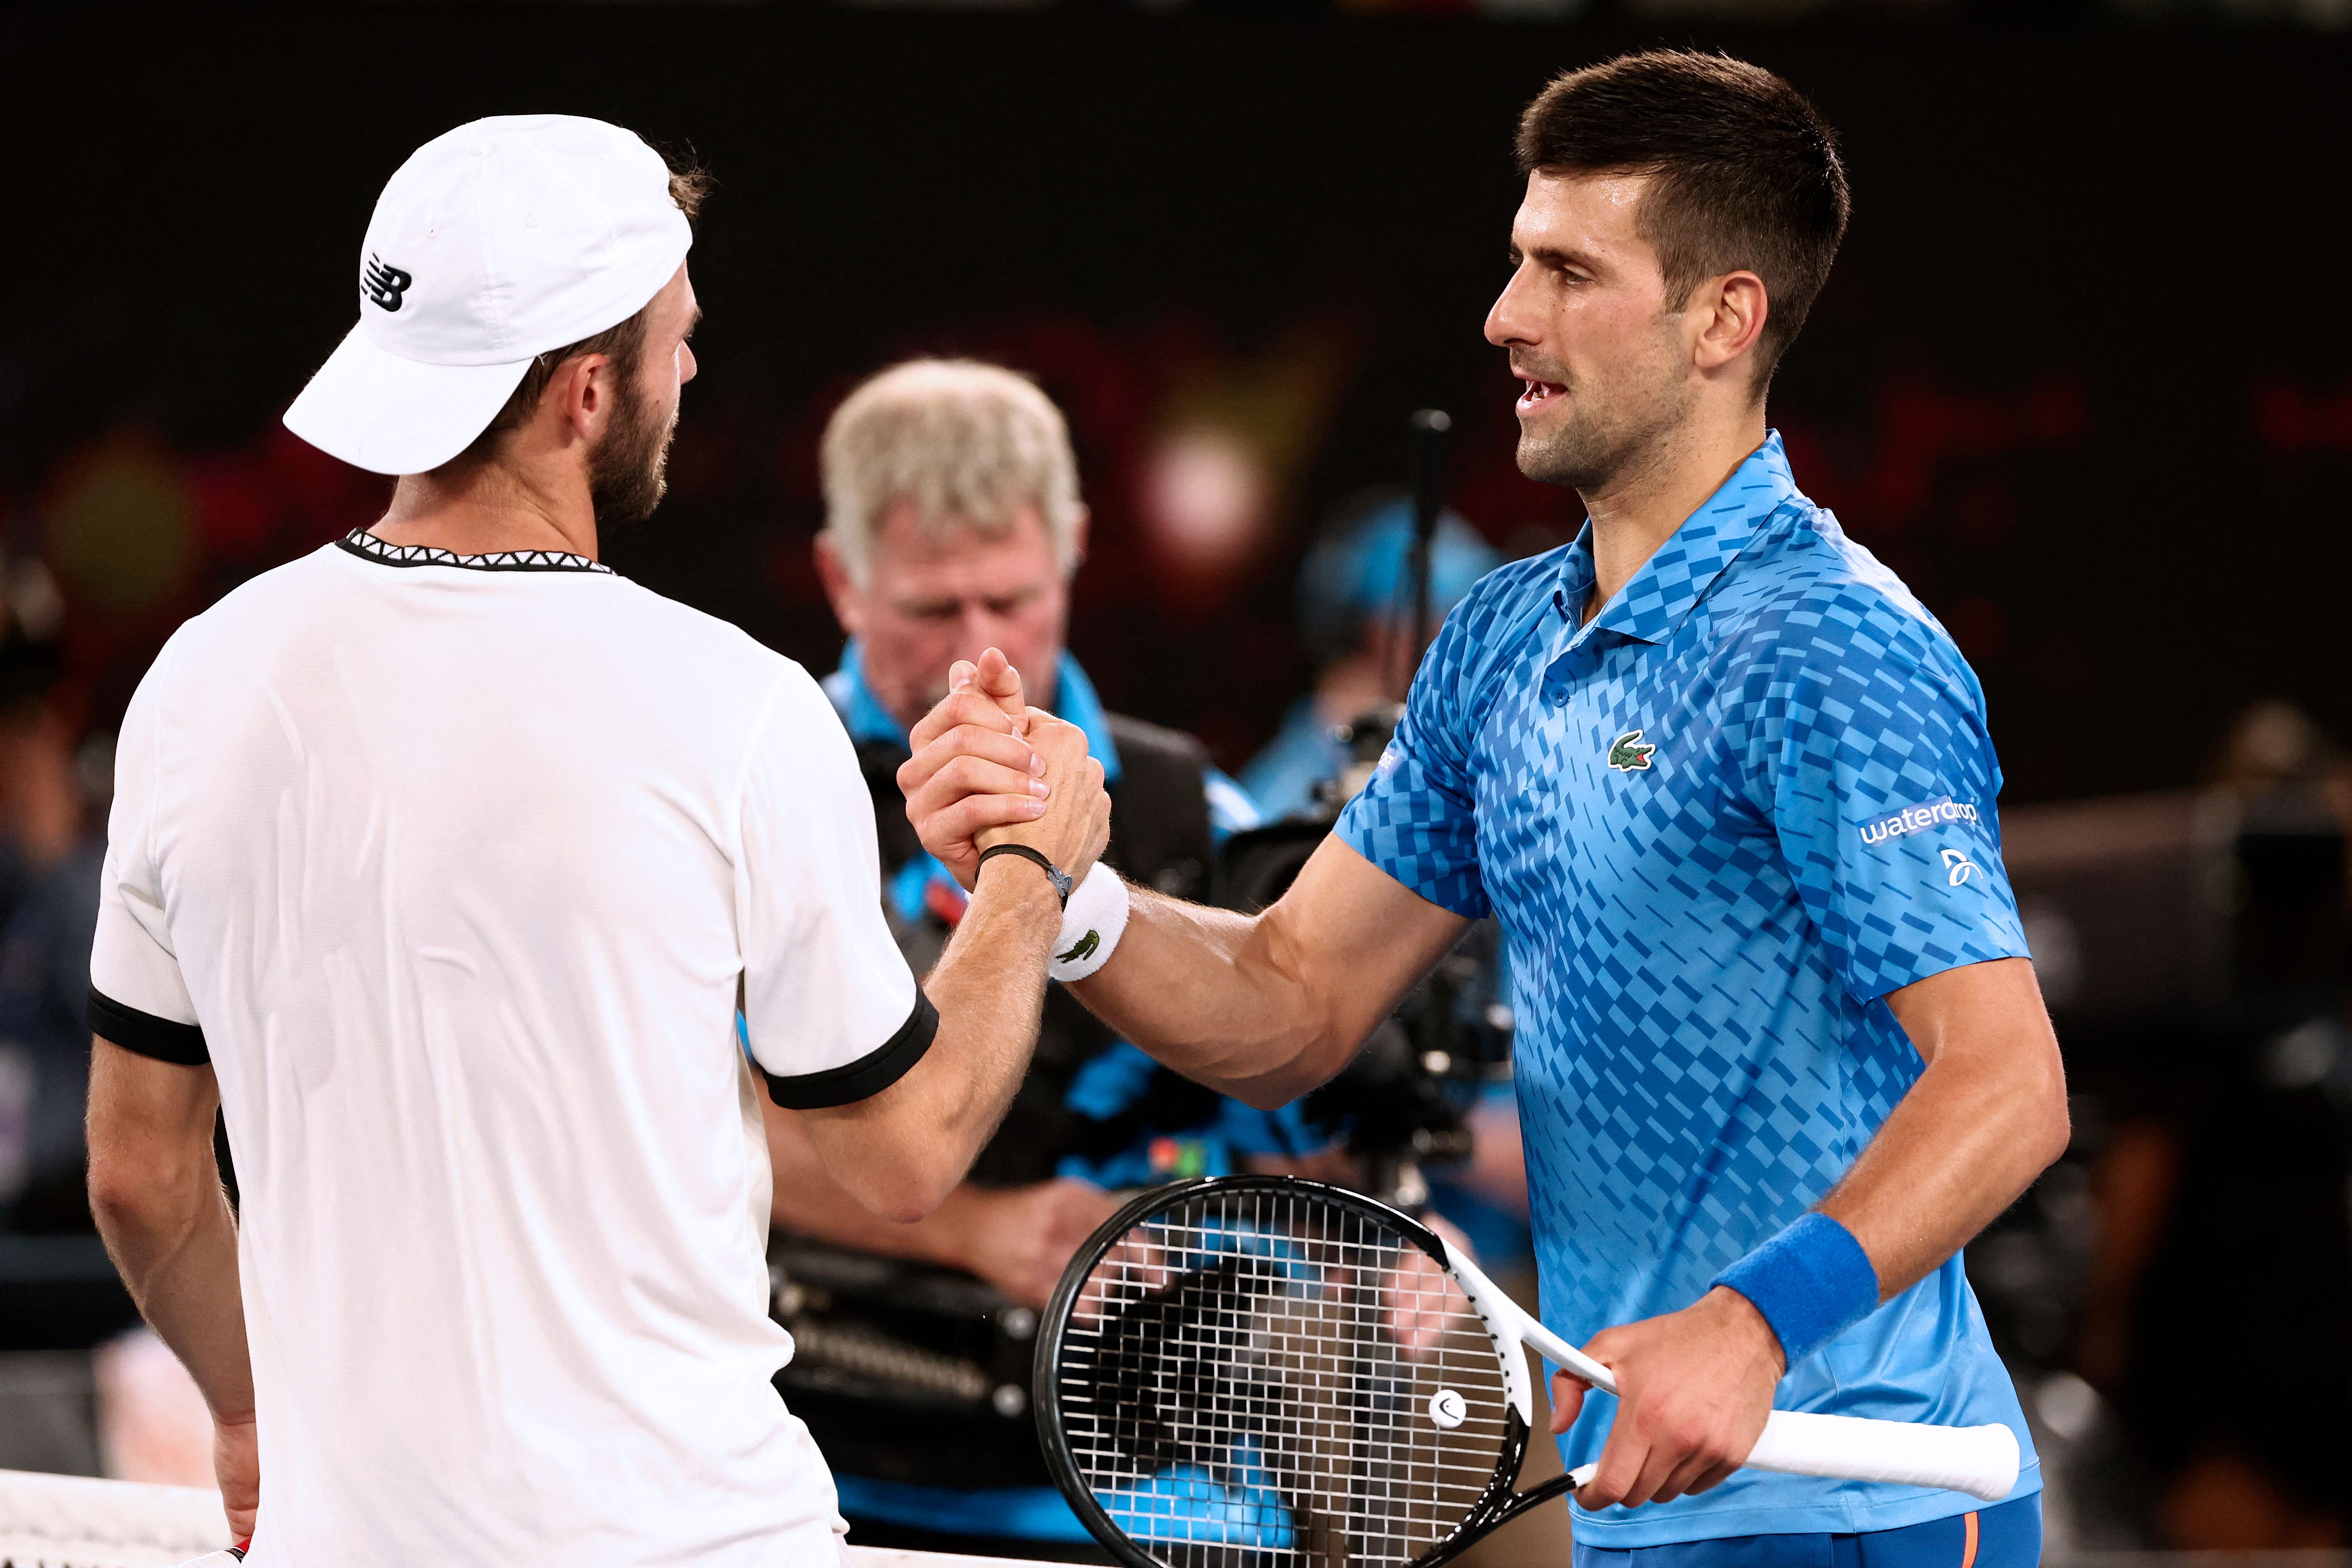 Novak Djokovic overcomes shaky start to set up Australian Open mens final matchup vs